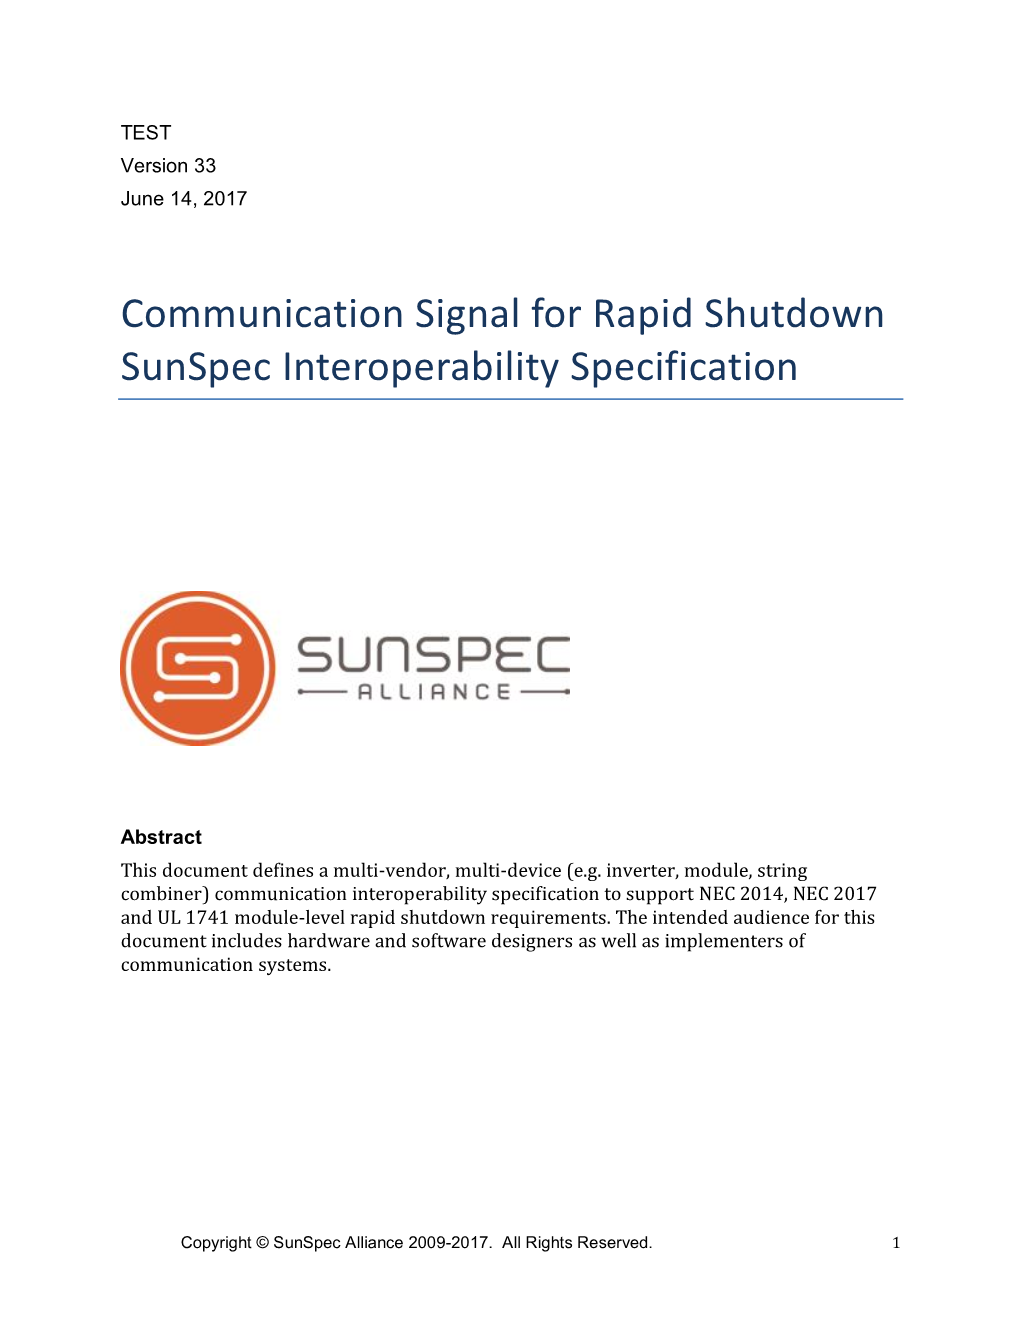 Communication Signal for Rapid Shutdown Sunspec Interoperability Specification